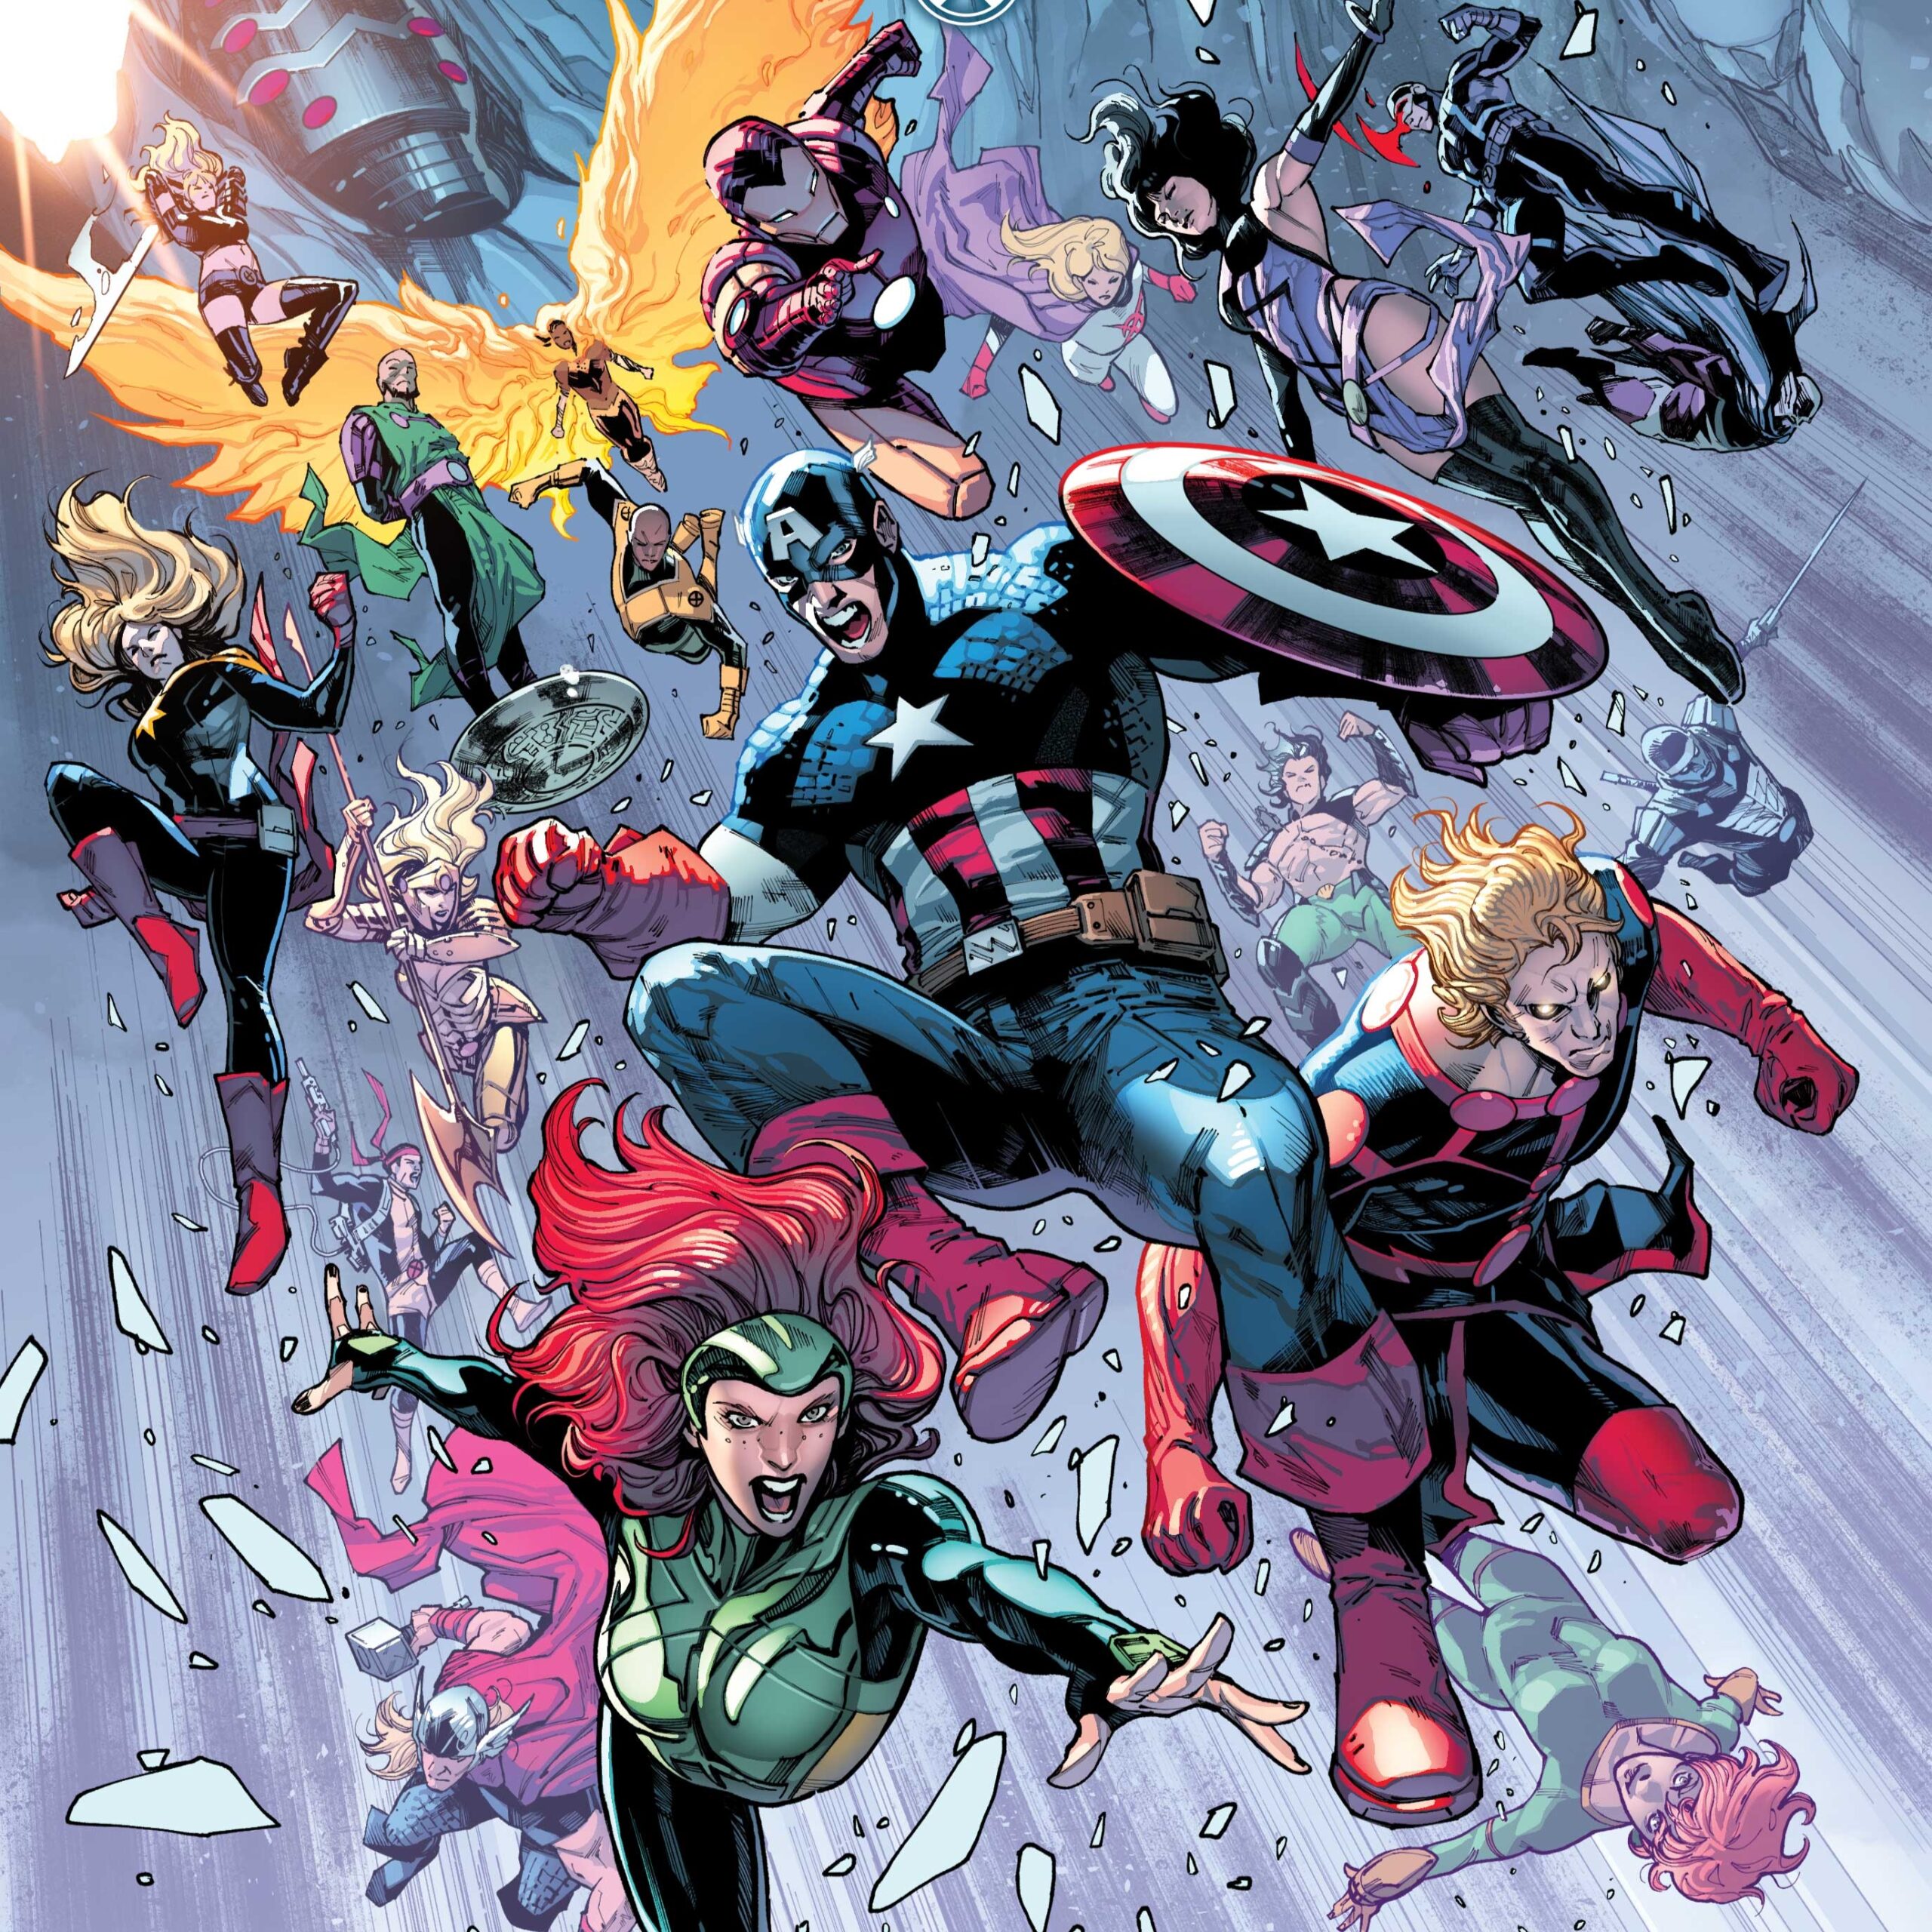 FCBD Avengers/X-Men Cover Arti via Marvel Comics for Valerio Schiti for use by 360 Magazine